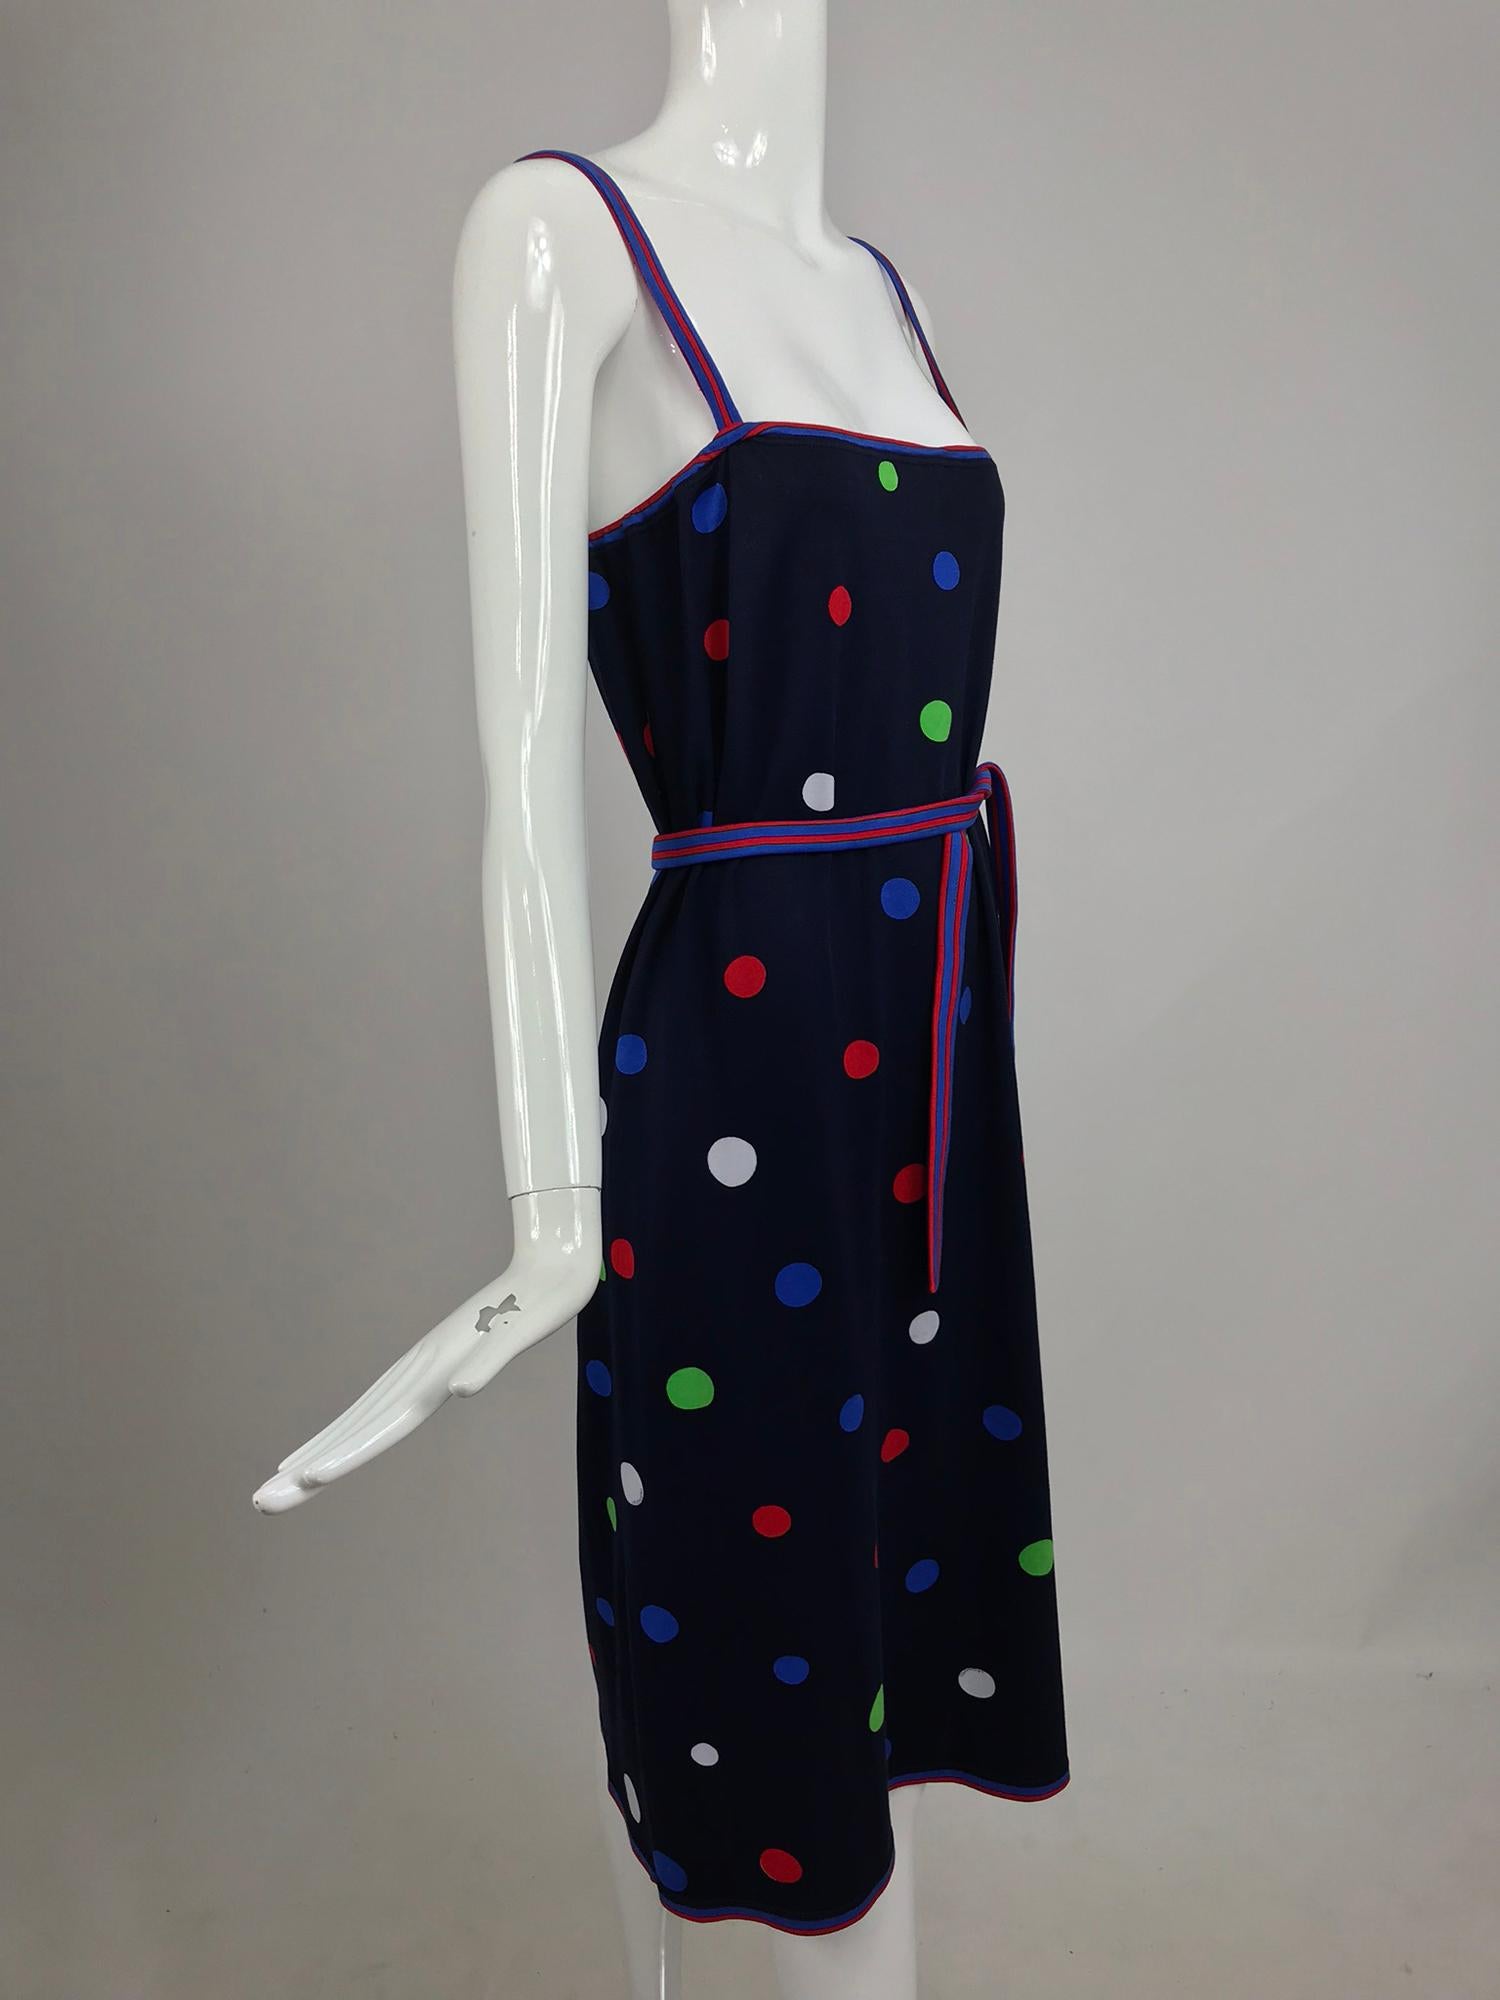 Leonard Paris Polka Dot Cotton Knit Sun Dress  In Good Condition For Sale In West Palm Beach, FL